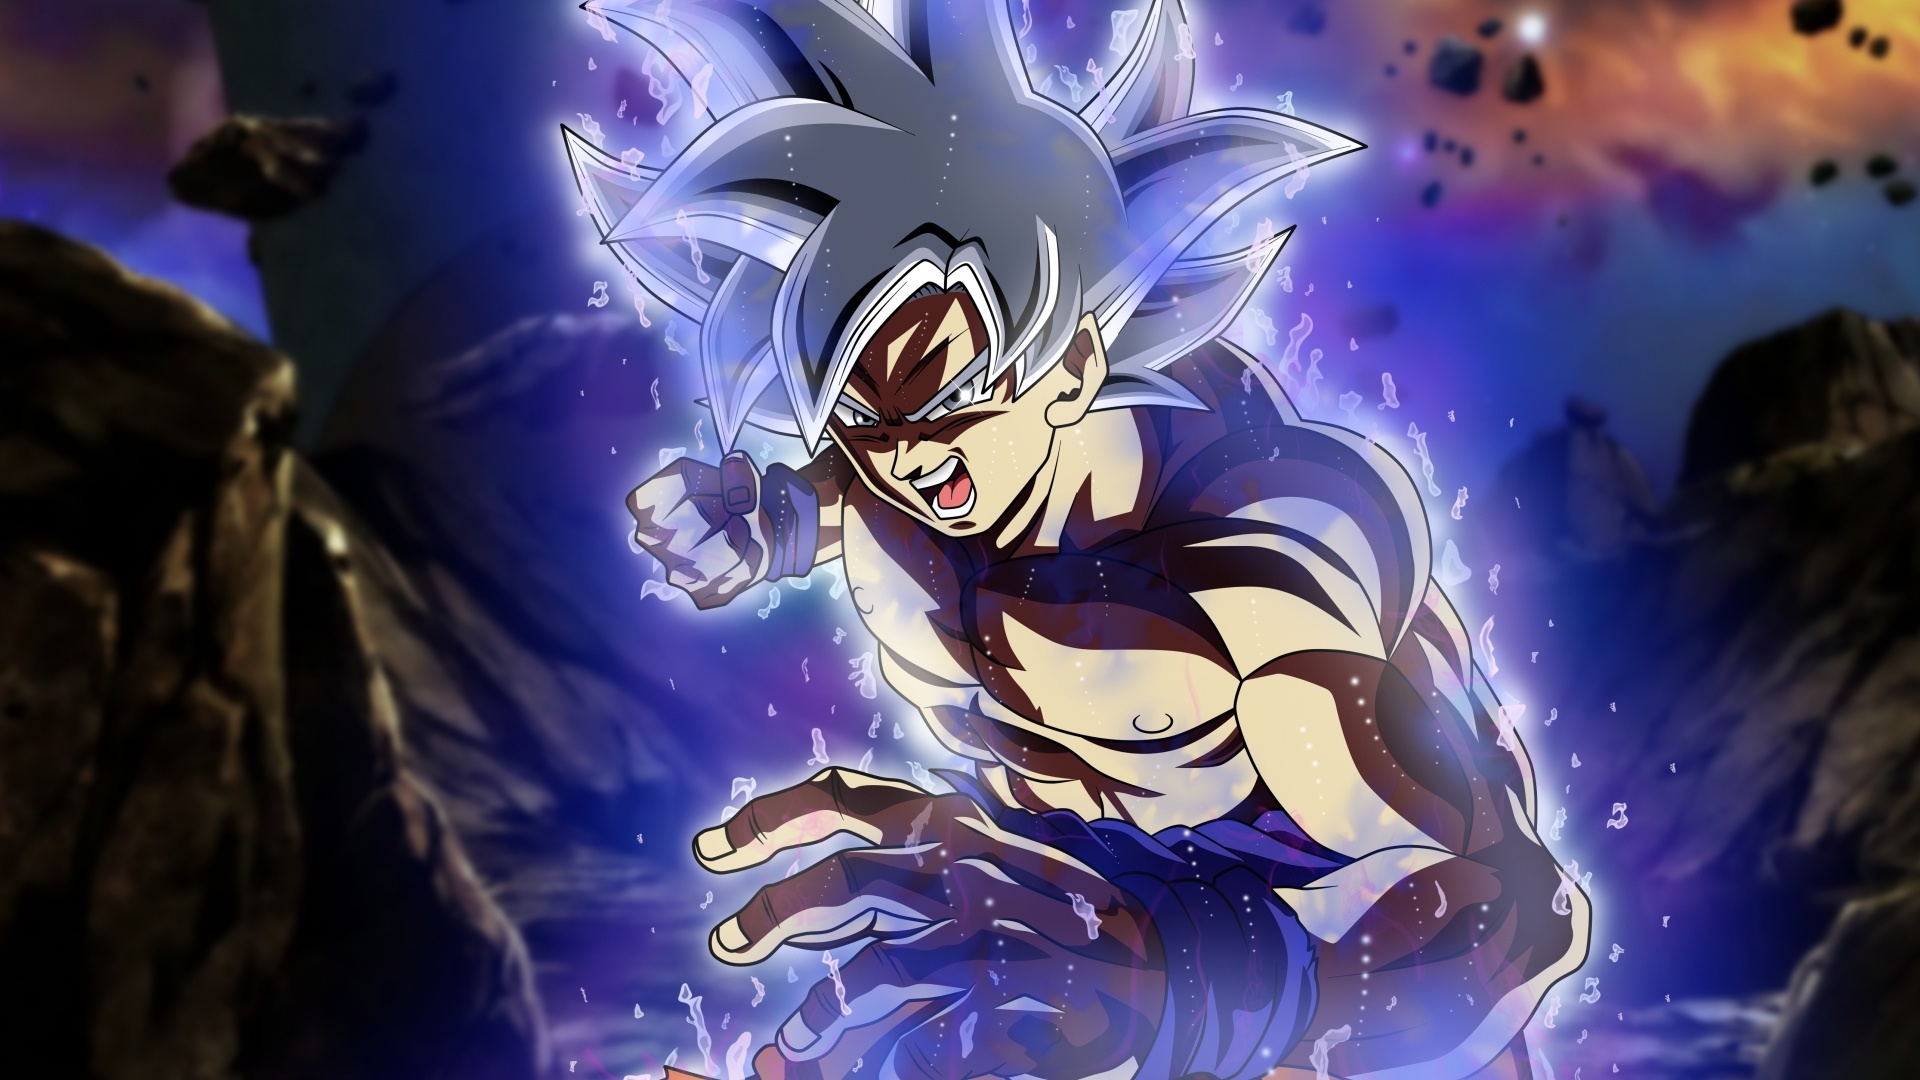 Goku Ultra Instinct desktop wallpaper free download